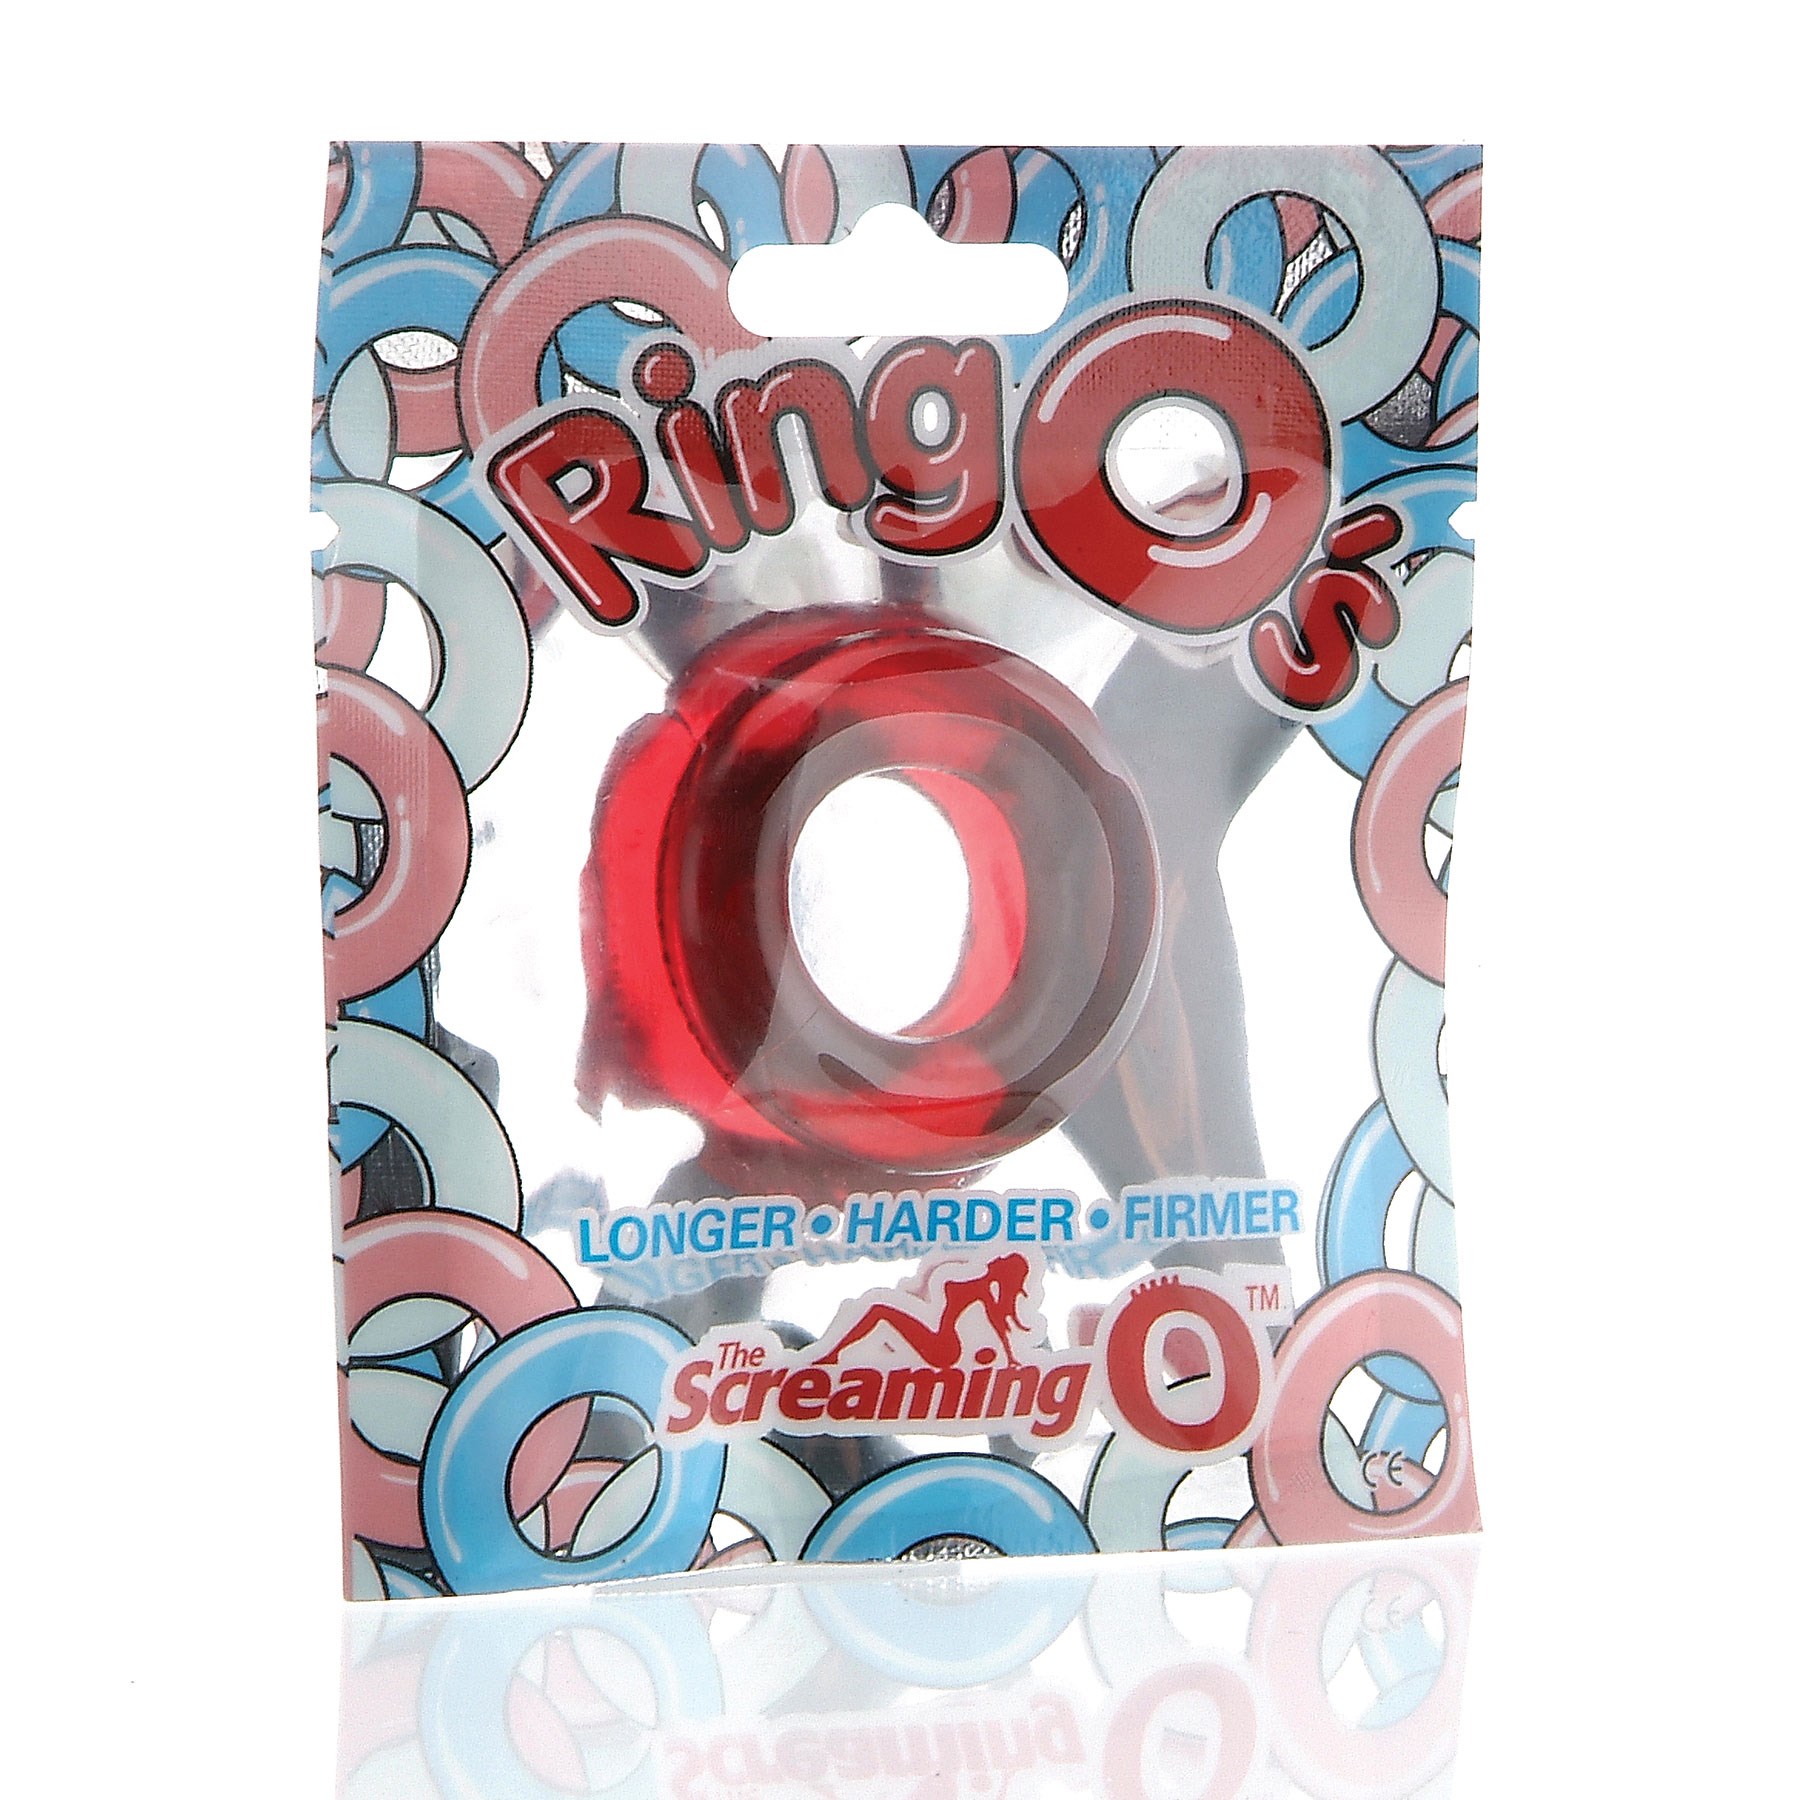 RingO's Penis Ring package